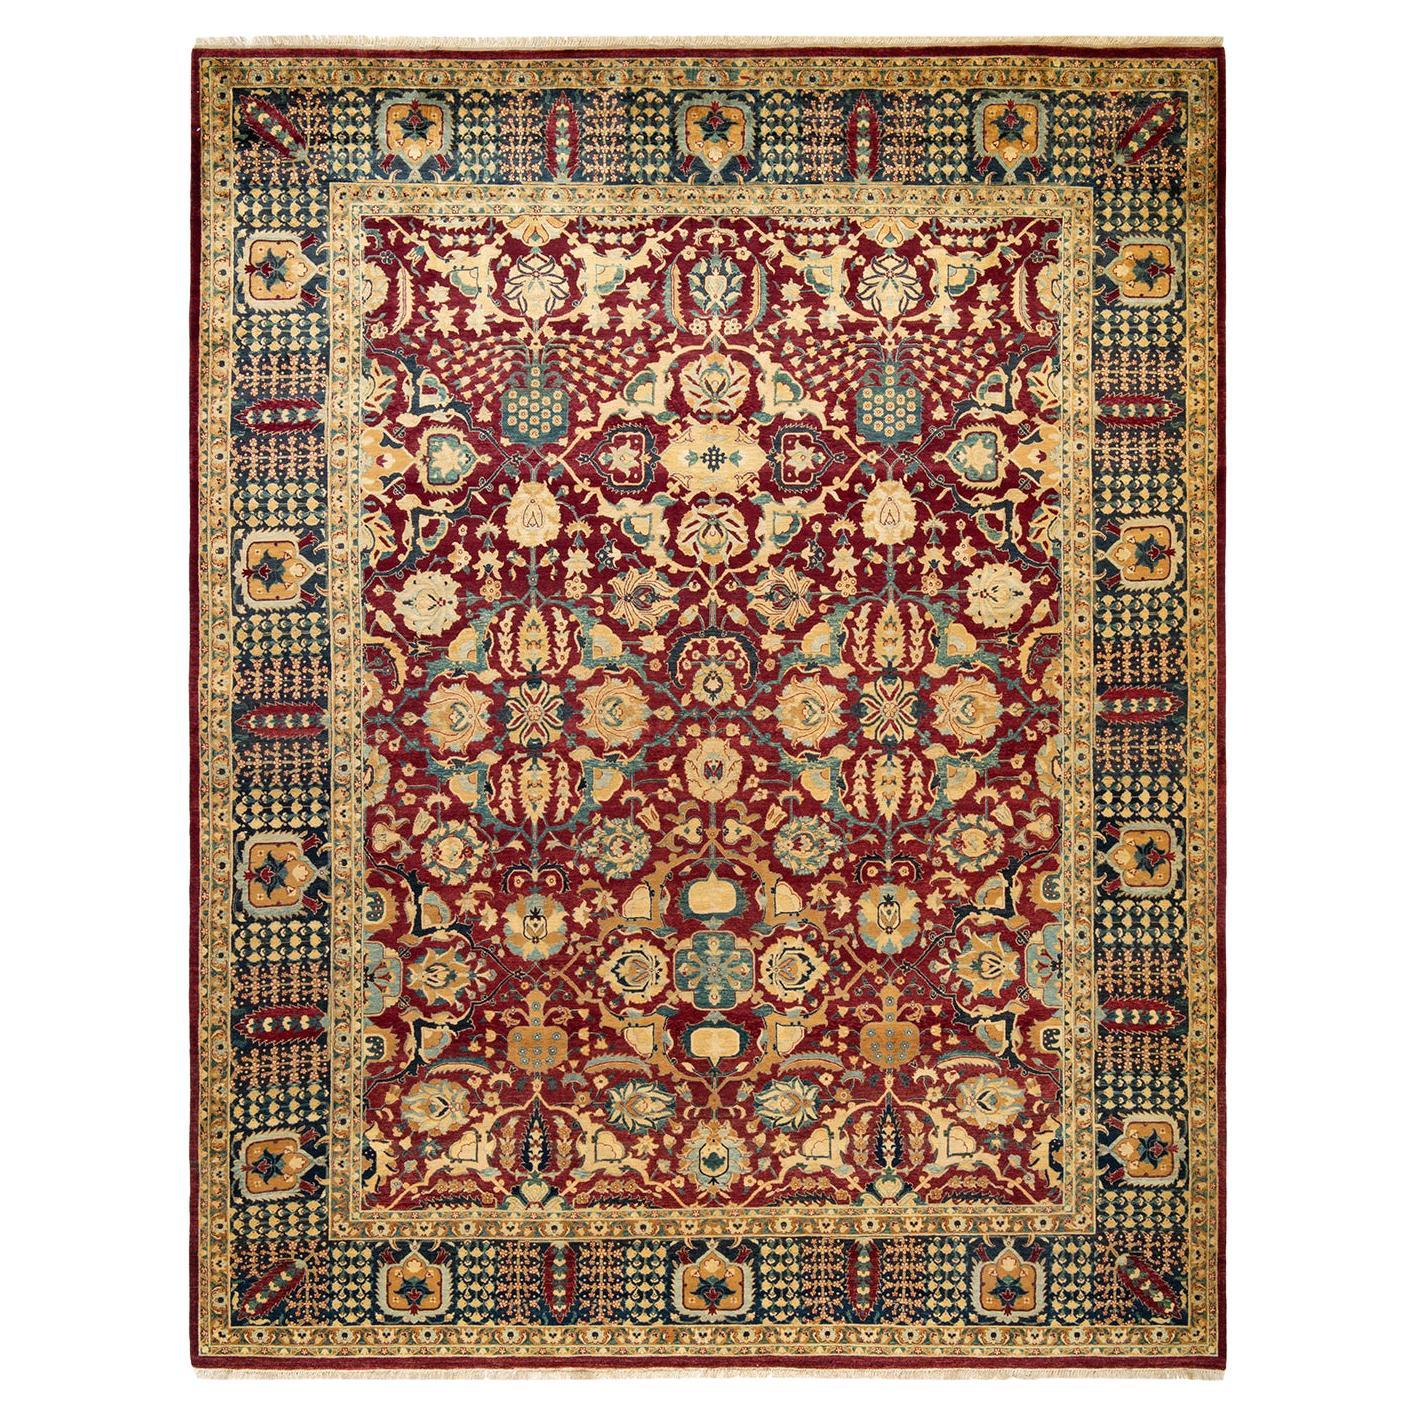 Handgefertigter, traditioneller Mogul-Roter Teppich, Unikat im Angebot